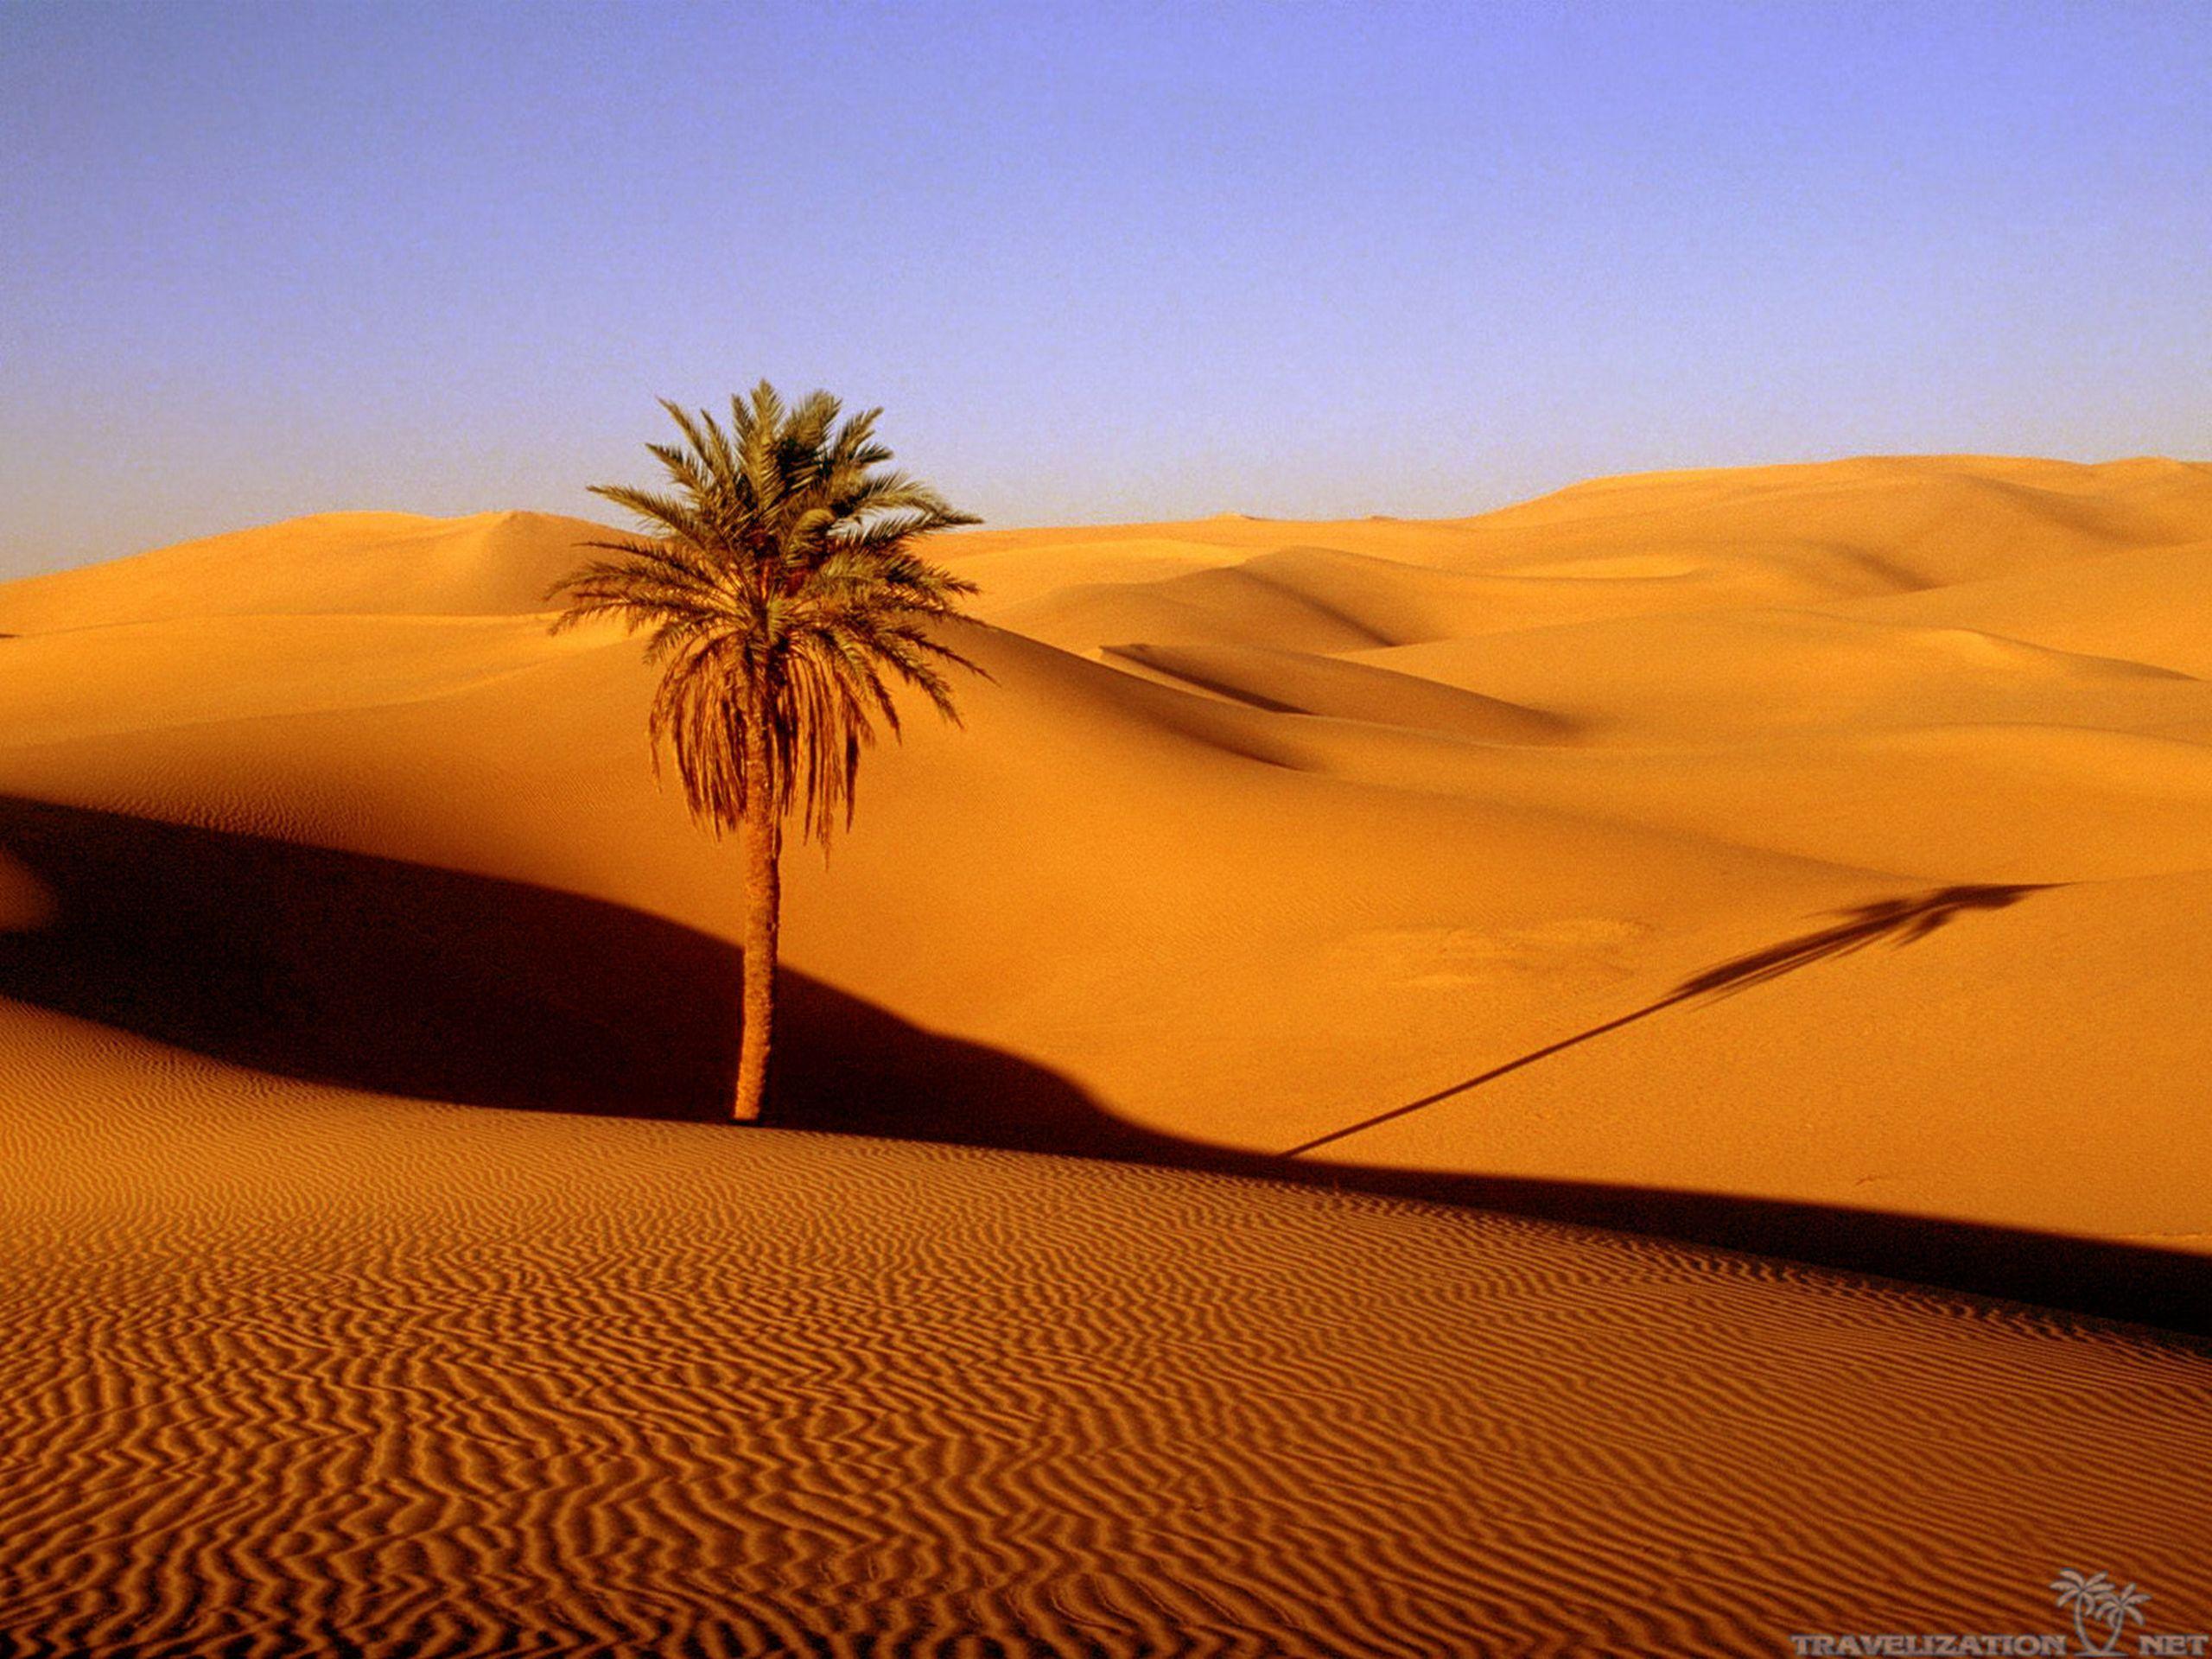 Fascinating Scenes of Desert Wallpaper